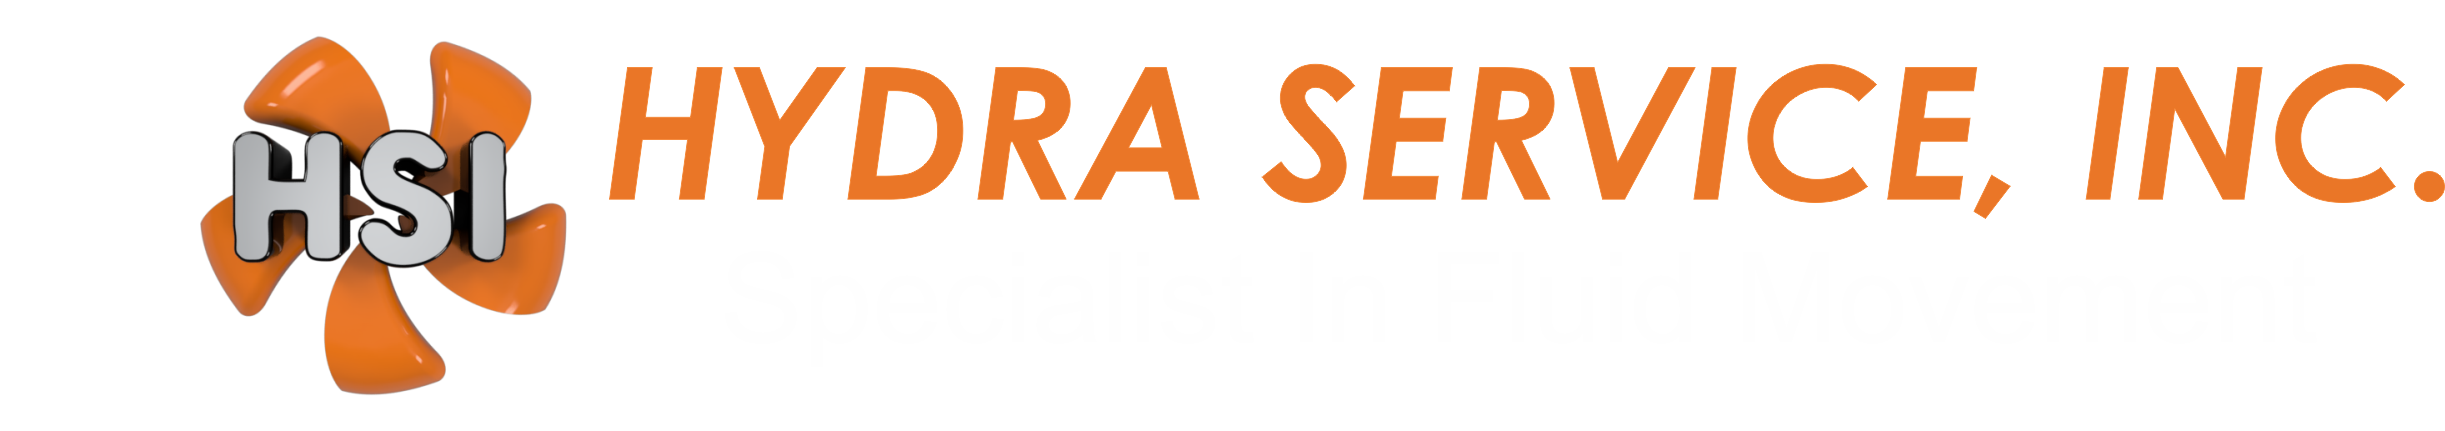 Hydra Service, Inc.